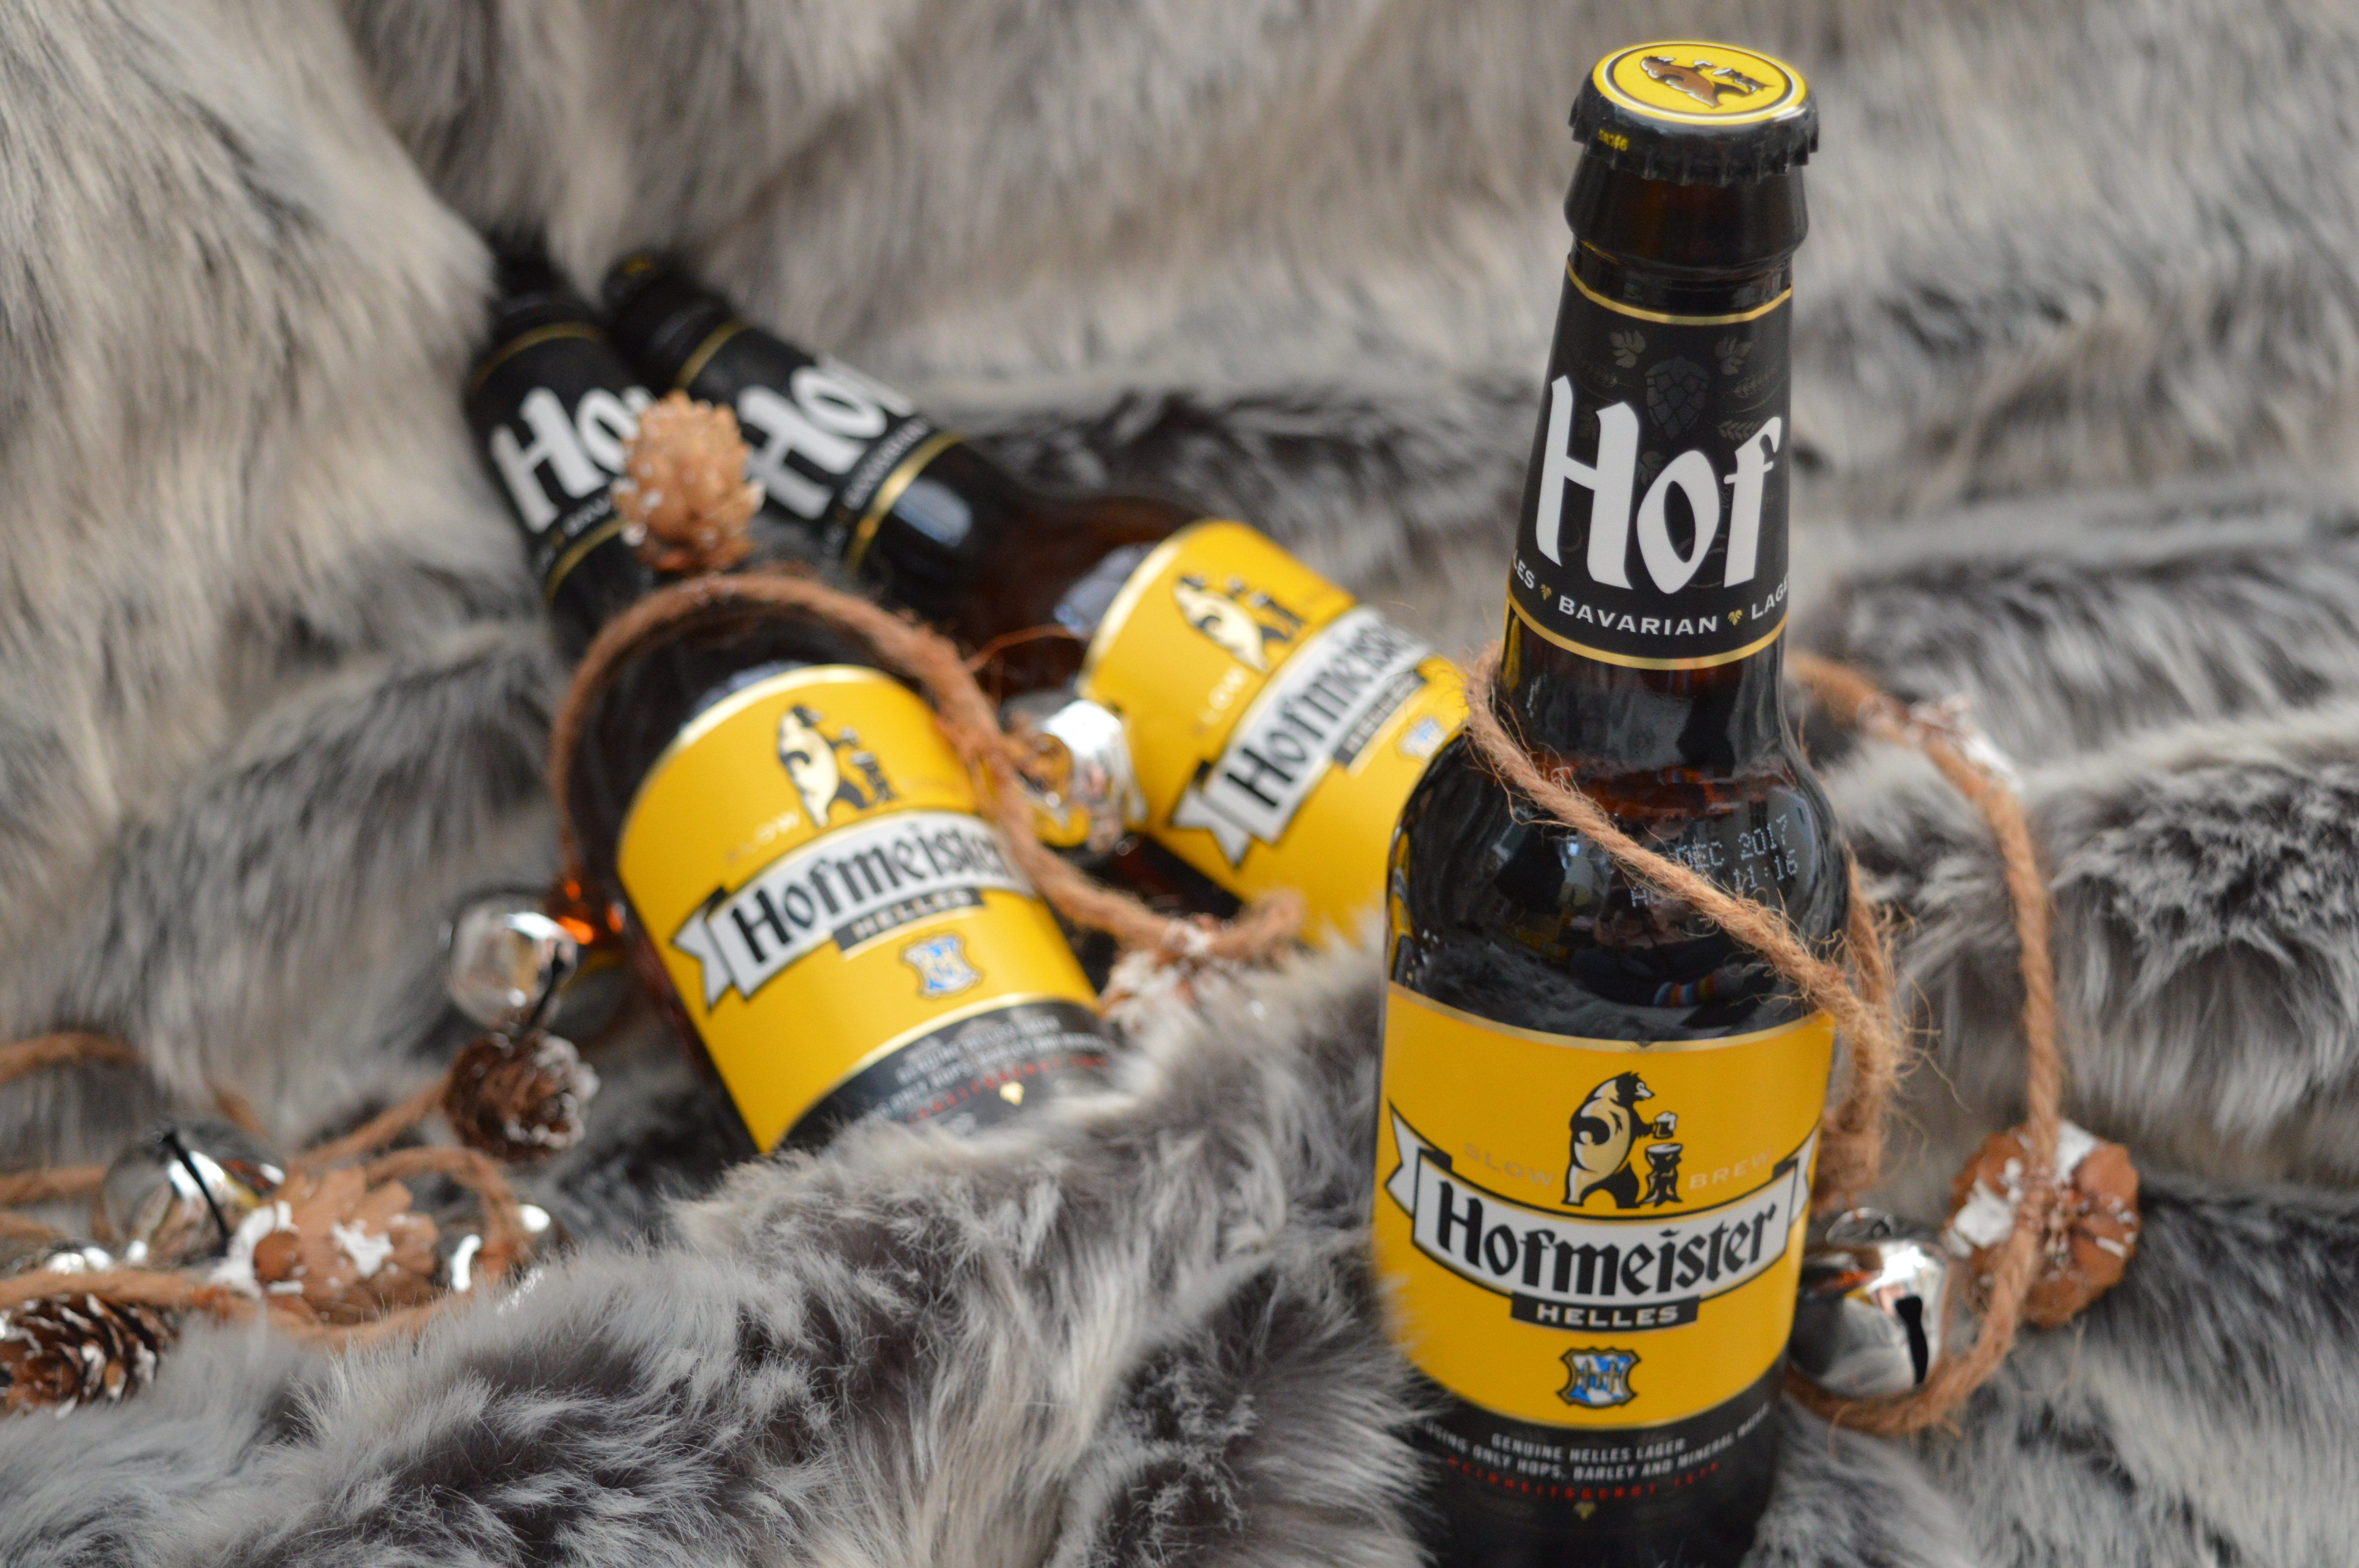 Hofmeister Bavarian Beer | Christmas Gift Guide | Elle Blonde Luxury Lifestyle Destination Blog